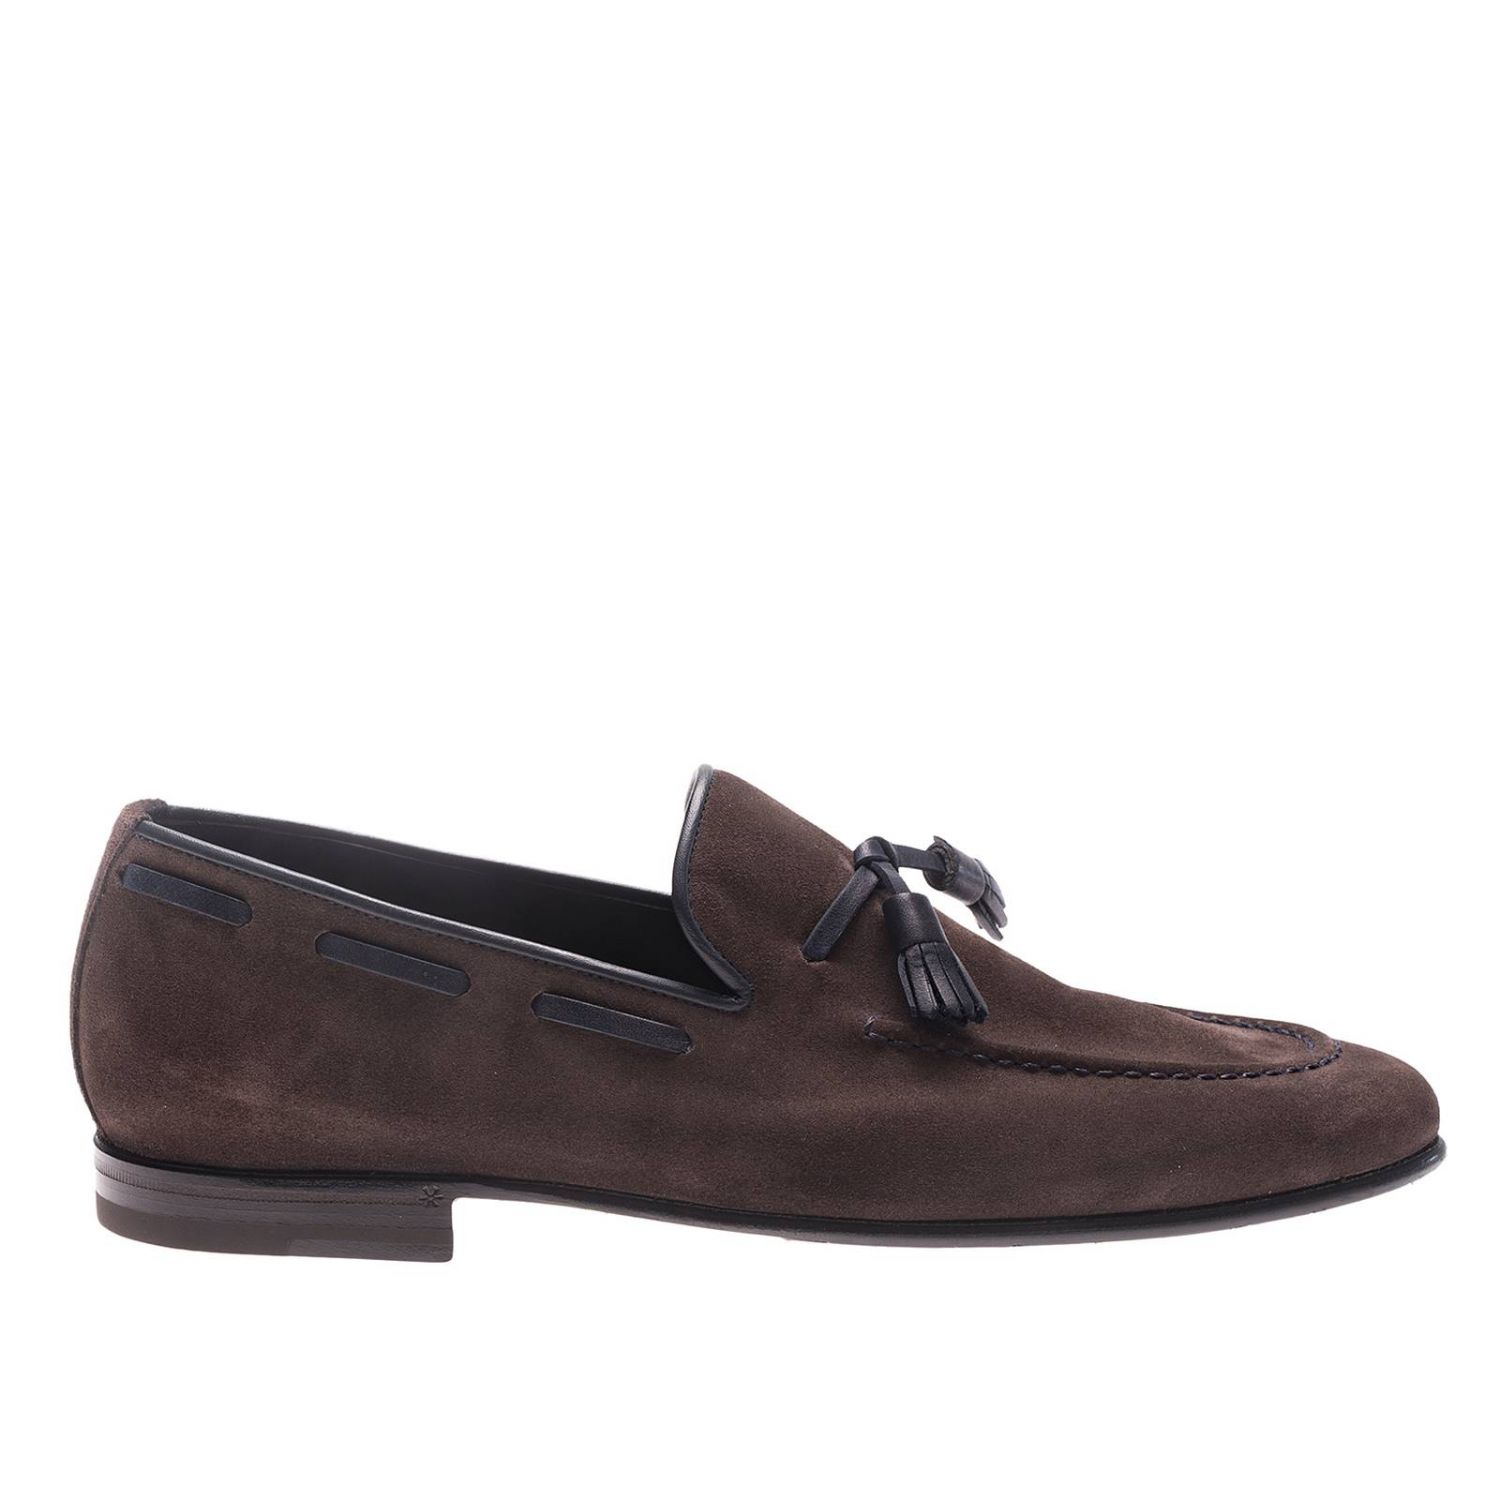 Barrett Outlet: Shoes men - Dark | Loafers Barrett 141u050 GIGLIO.COM